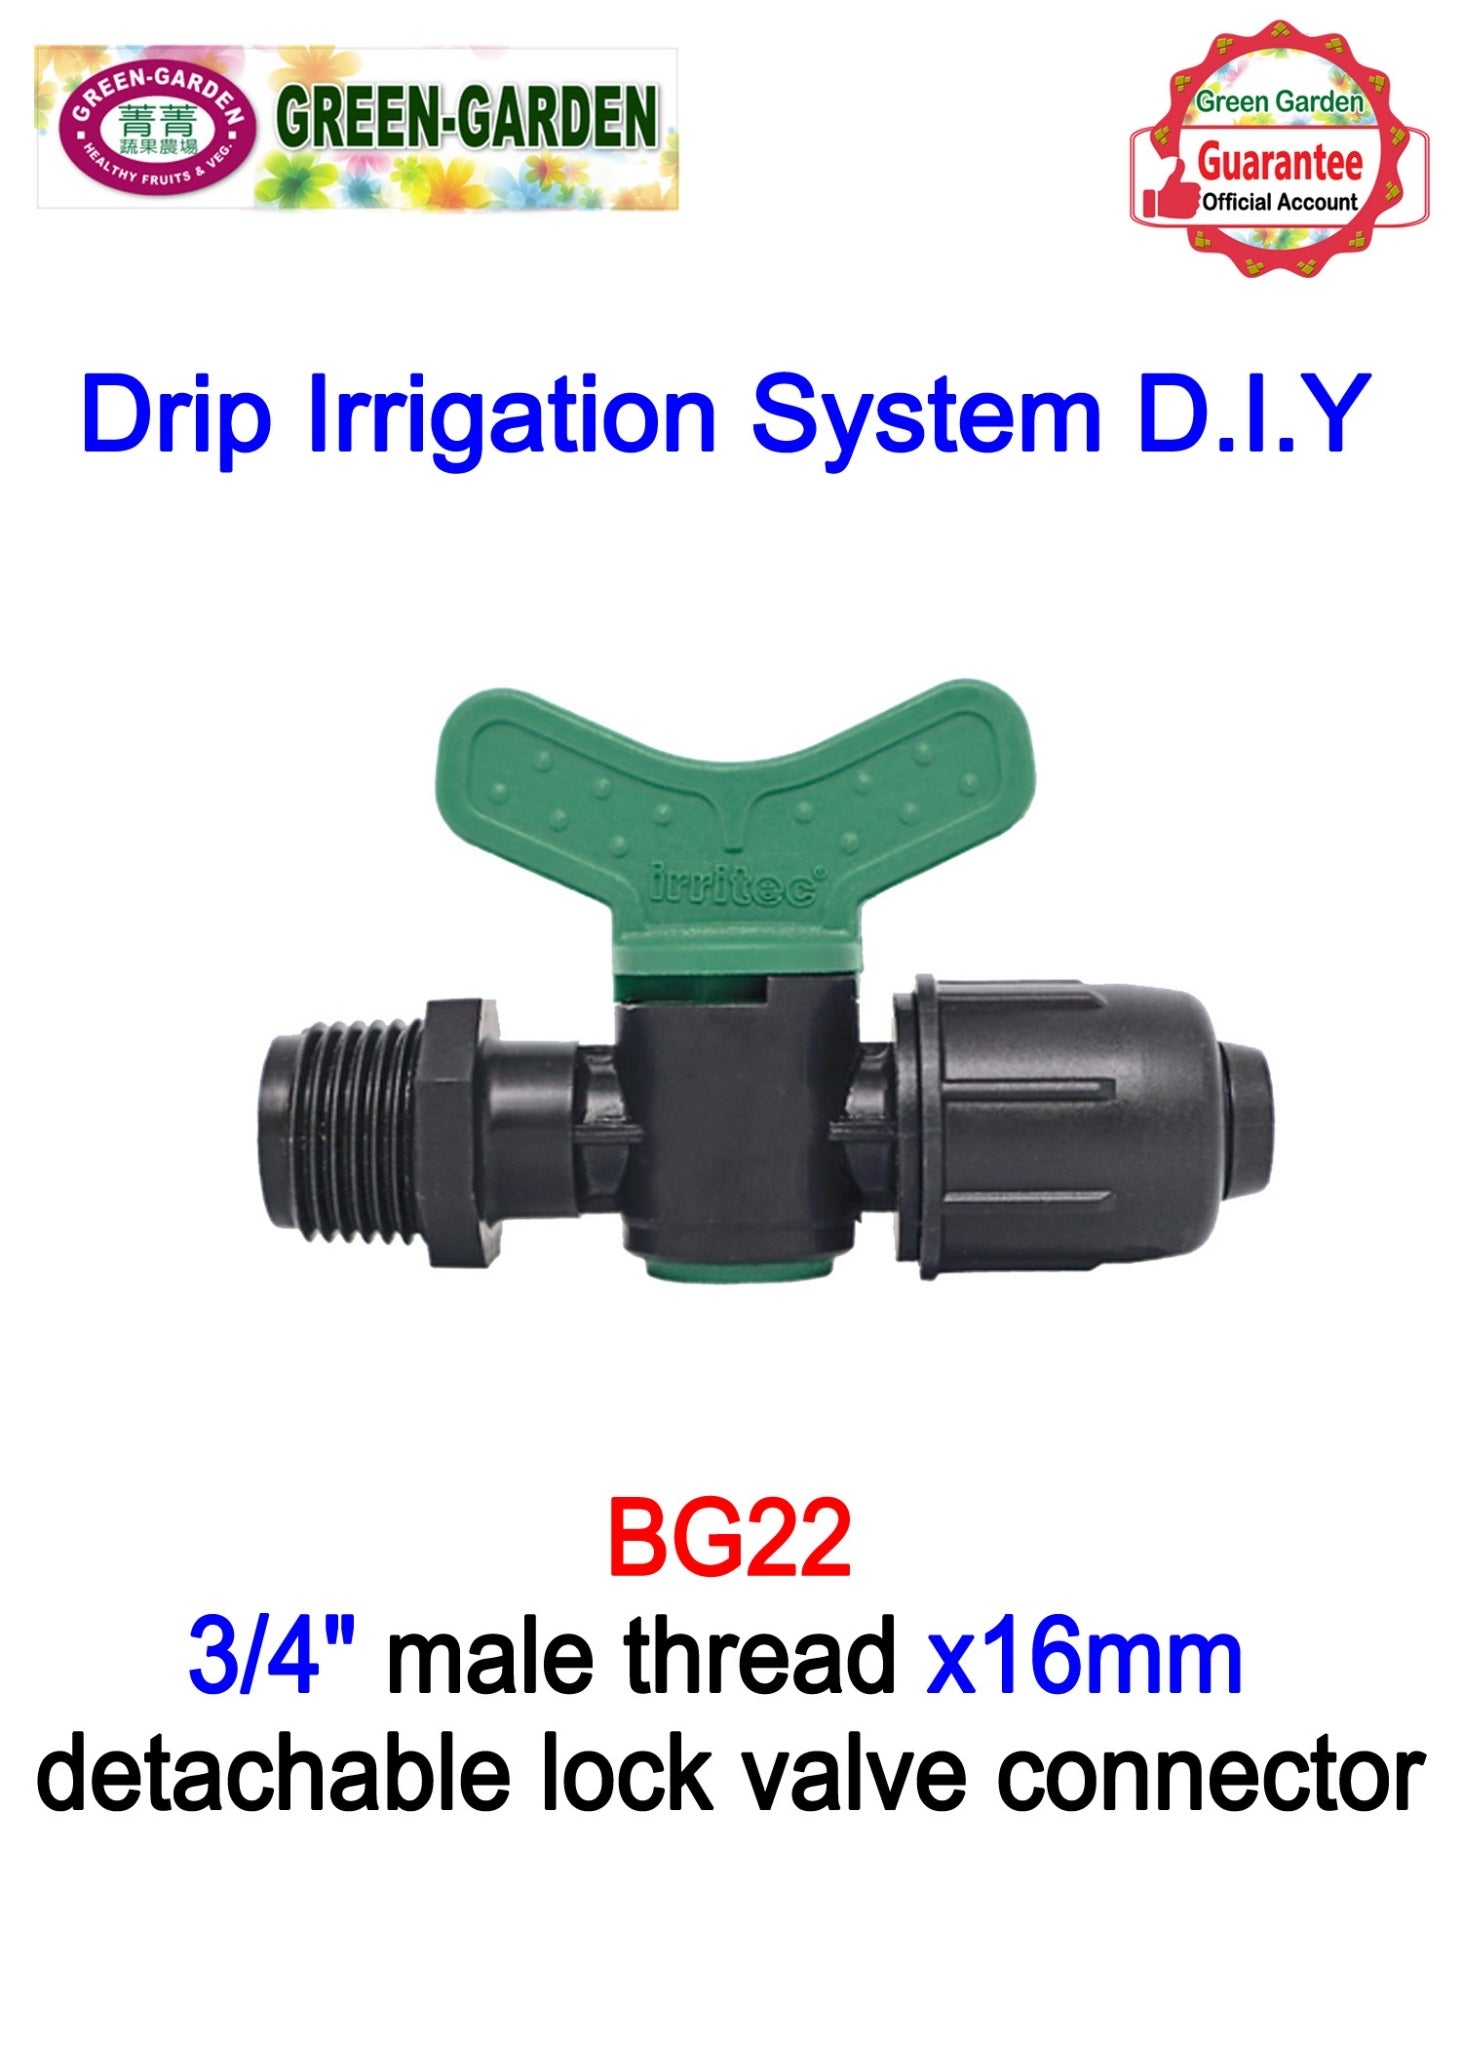 Drip Irrigation System - 3/4"male thread x16mm detachable lock valve connector BG22